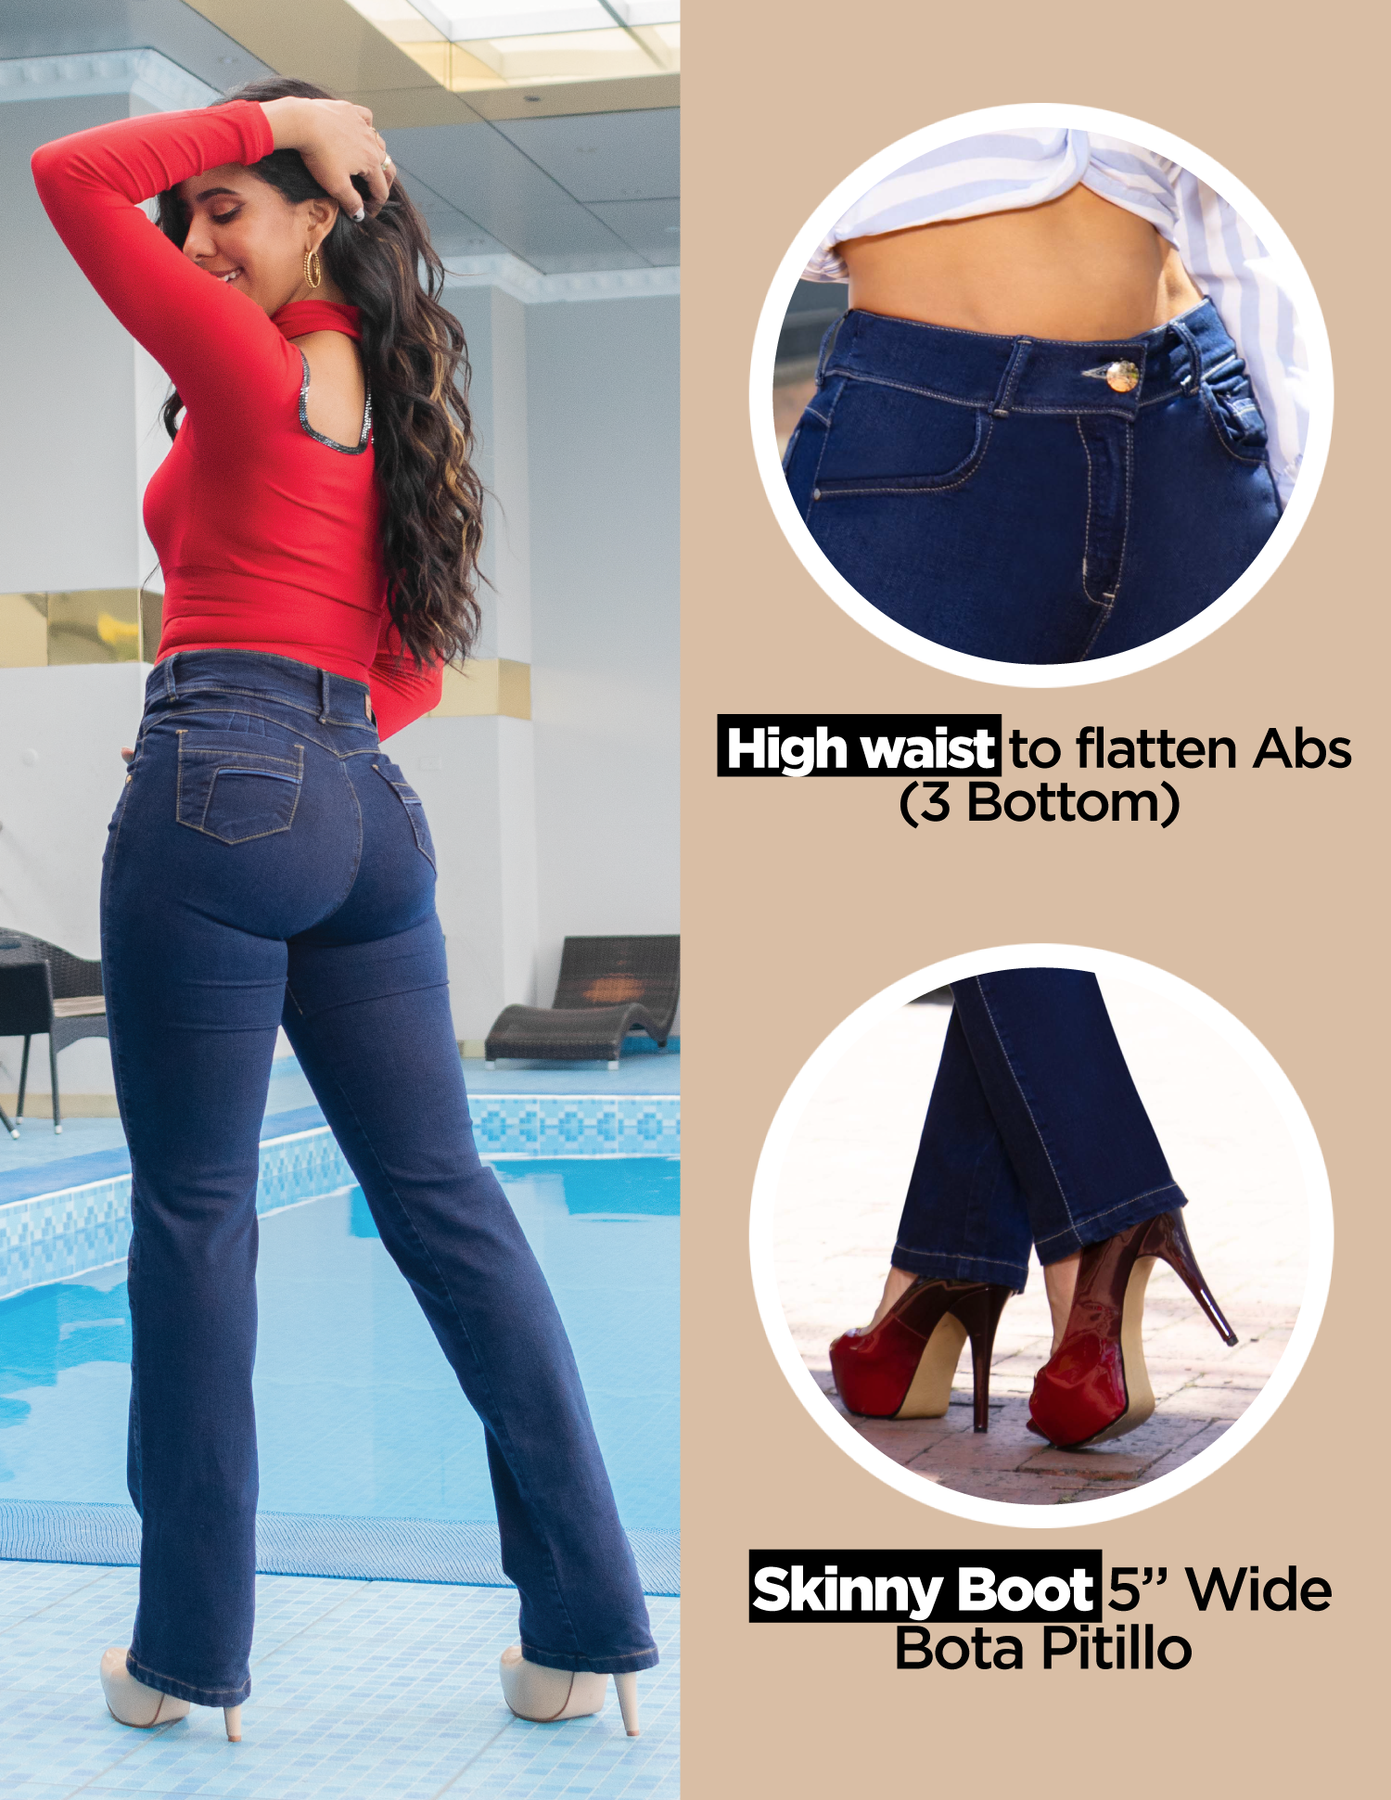 Booty-lifting 'levanta cola' jeans go mainstream